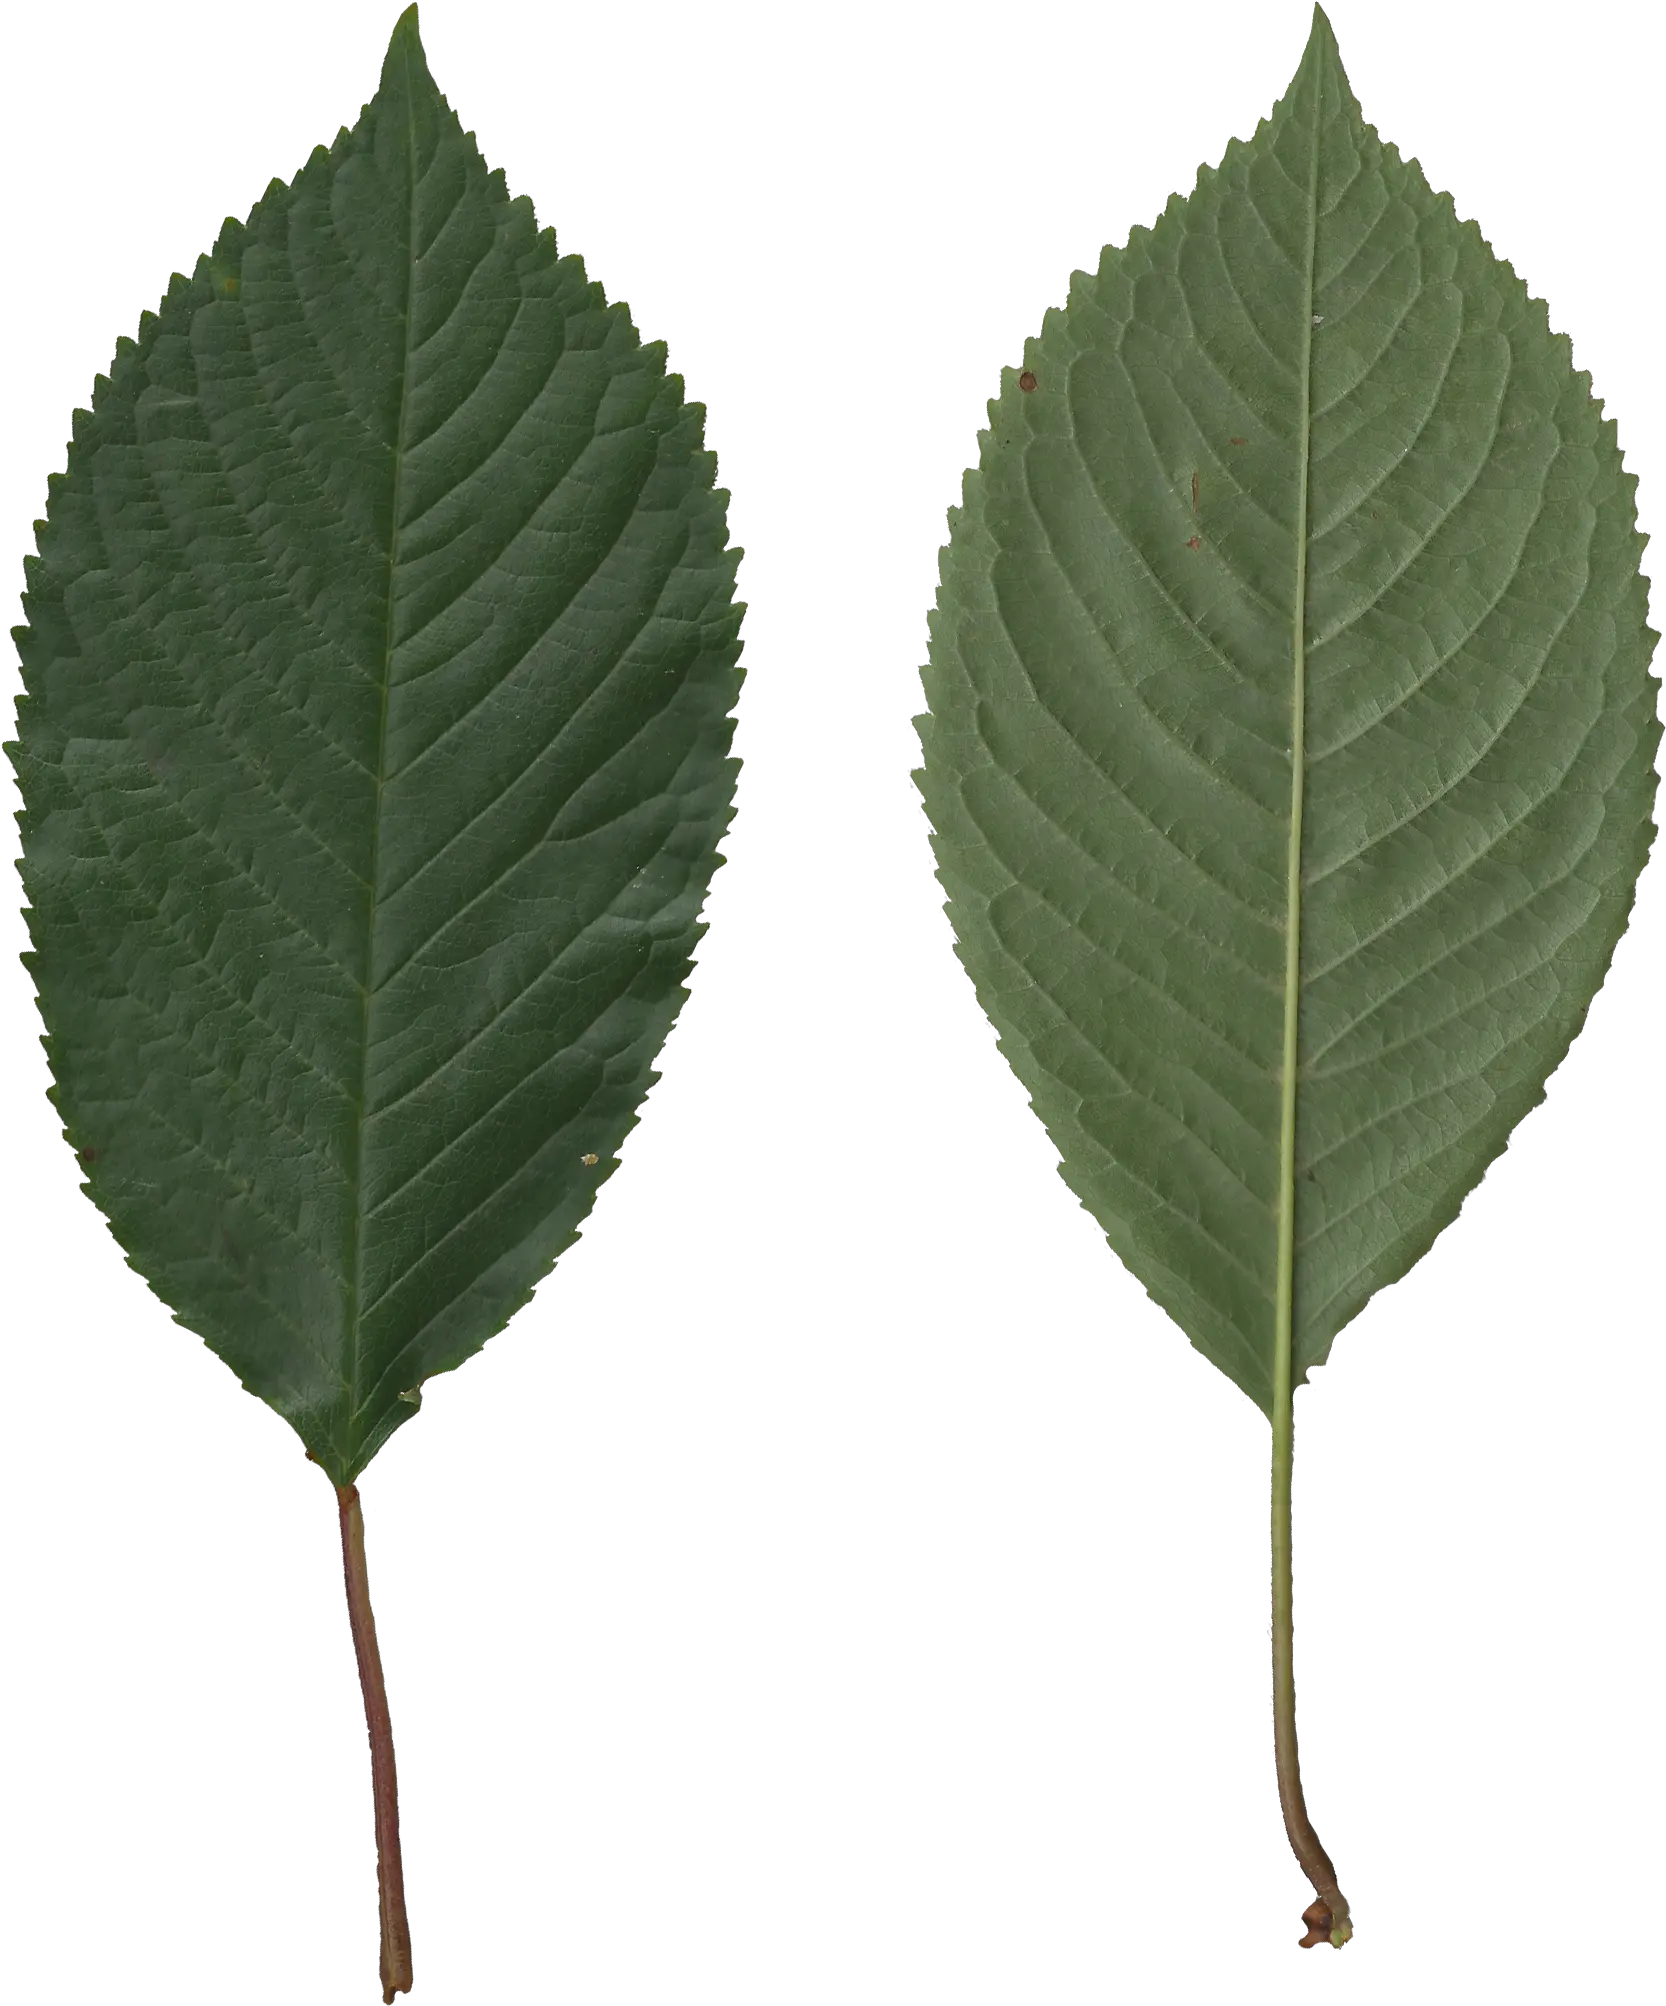 Fileprunus Avium Scanned Leaves Front Rear Sidepng Scanned Leaves Leave Png